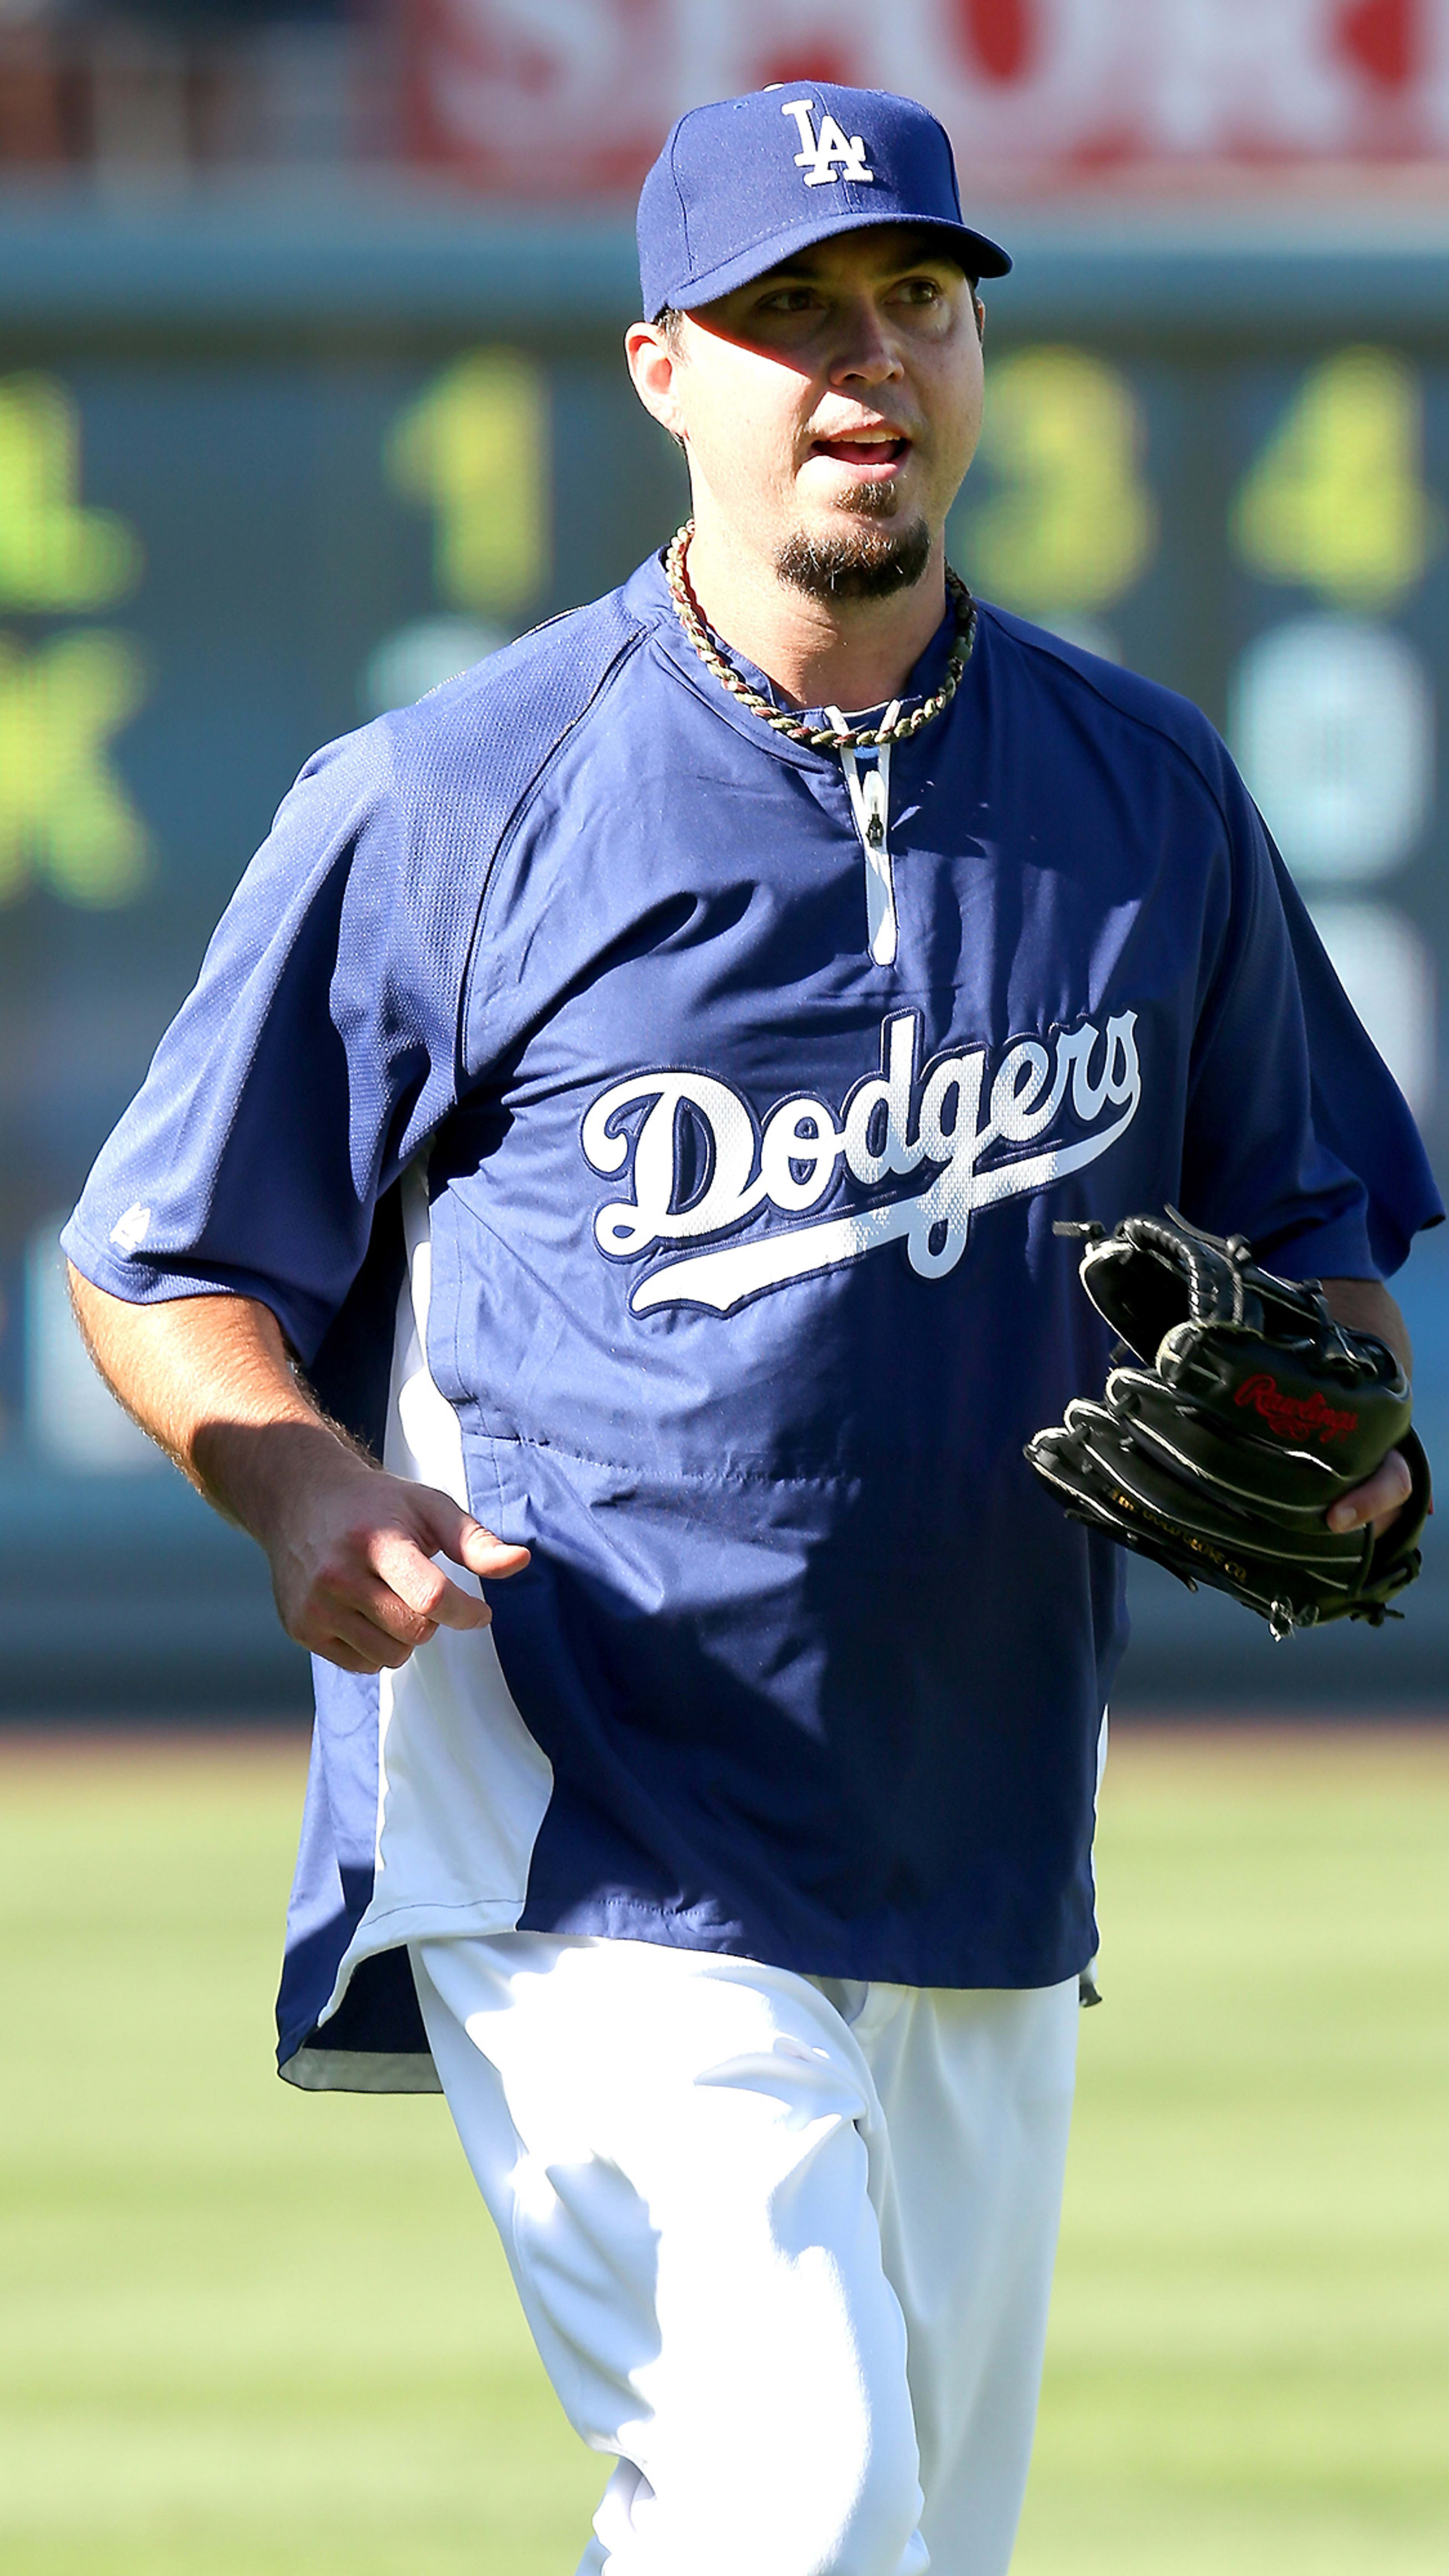 No-hitter sweet redemption for Dodgers' Josh Beckett